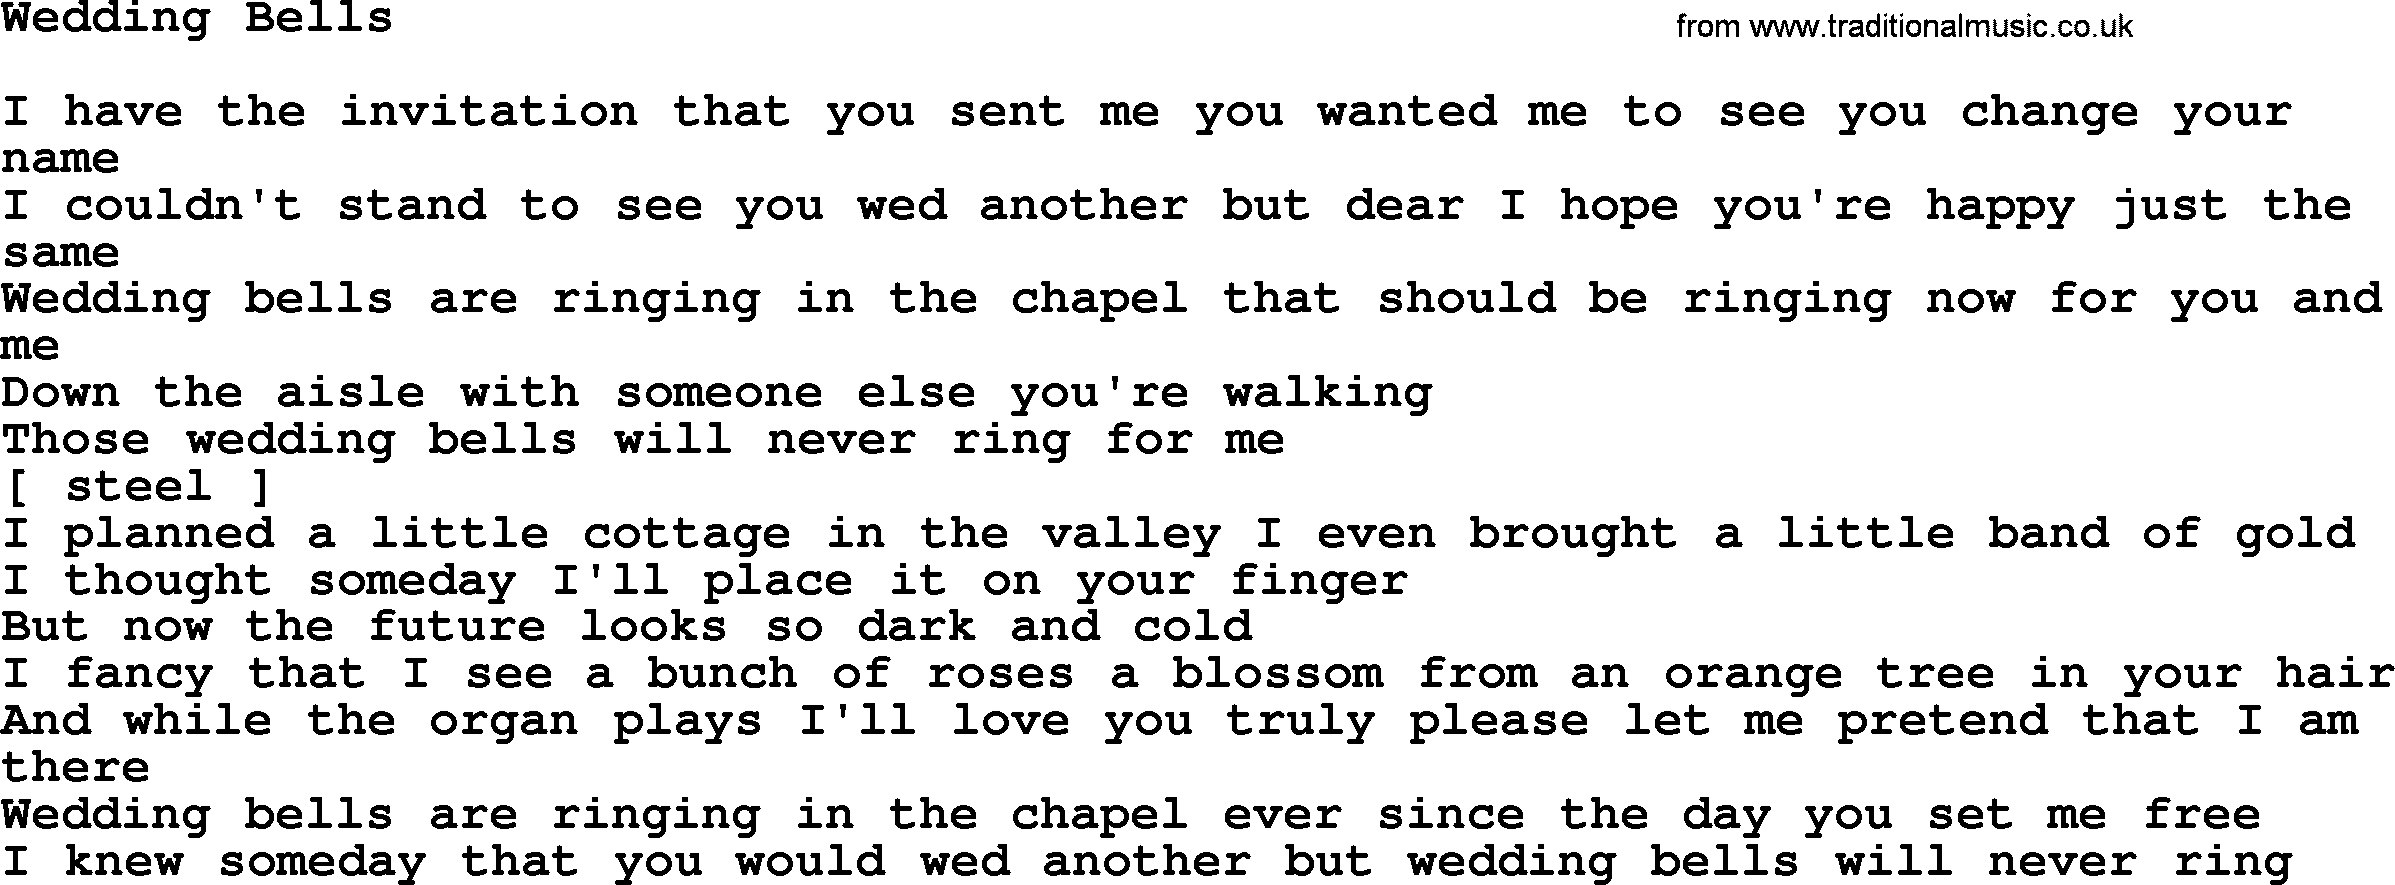 George Jones song: Wedding Bells, lyrics